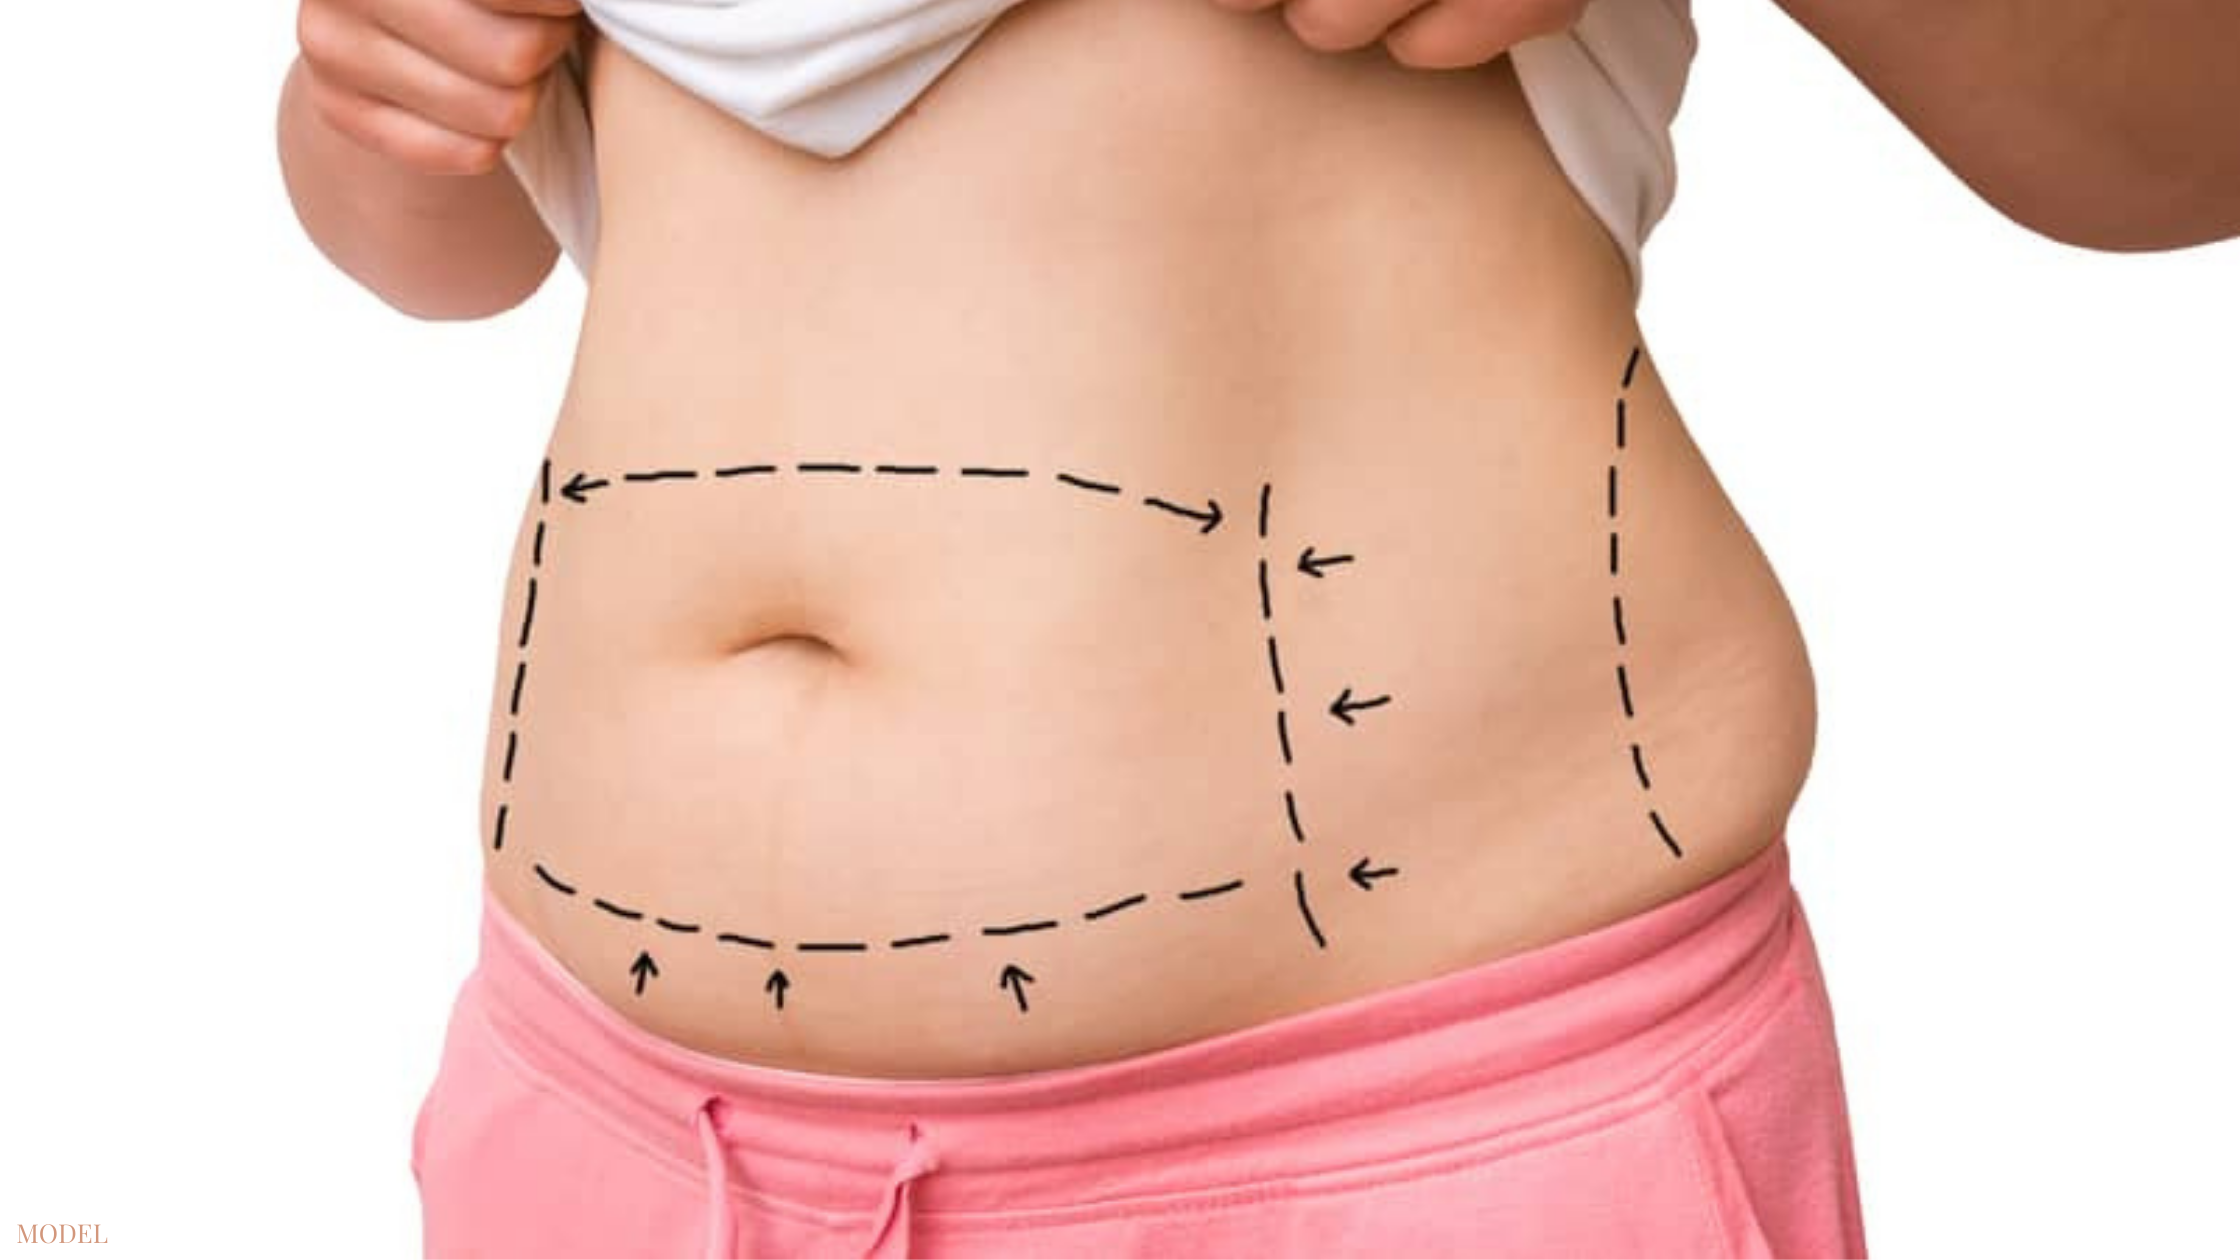 Mini, Standard & Extended Tummy Tucks vs Body Lifts - ABCS